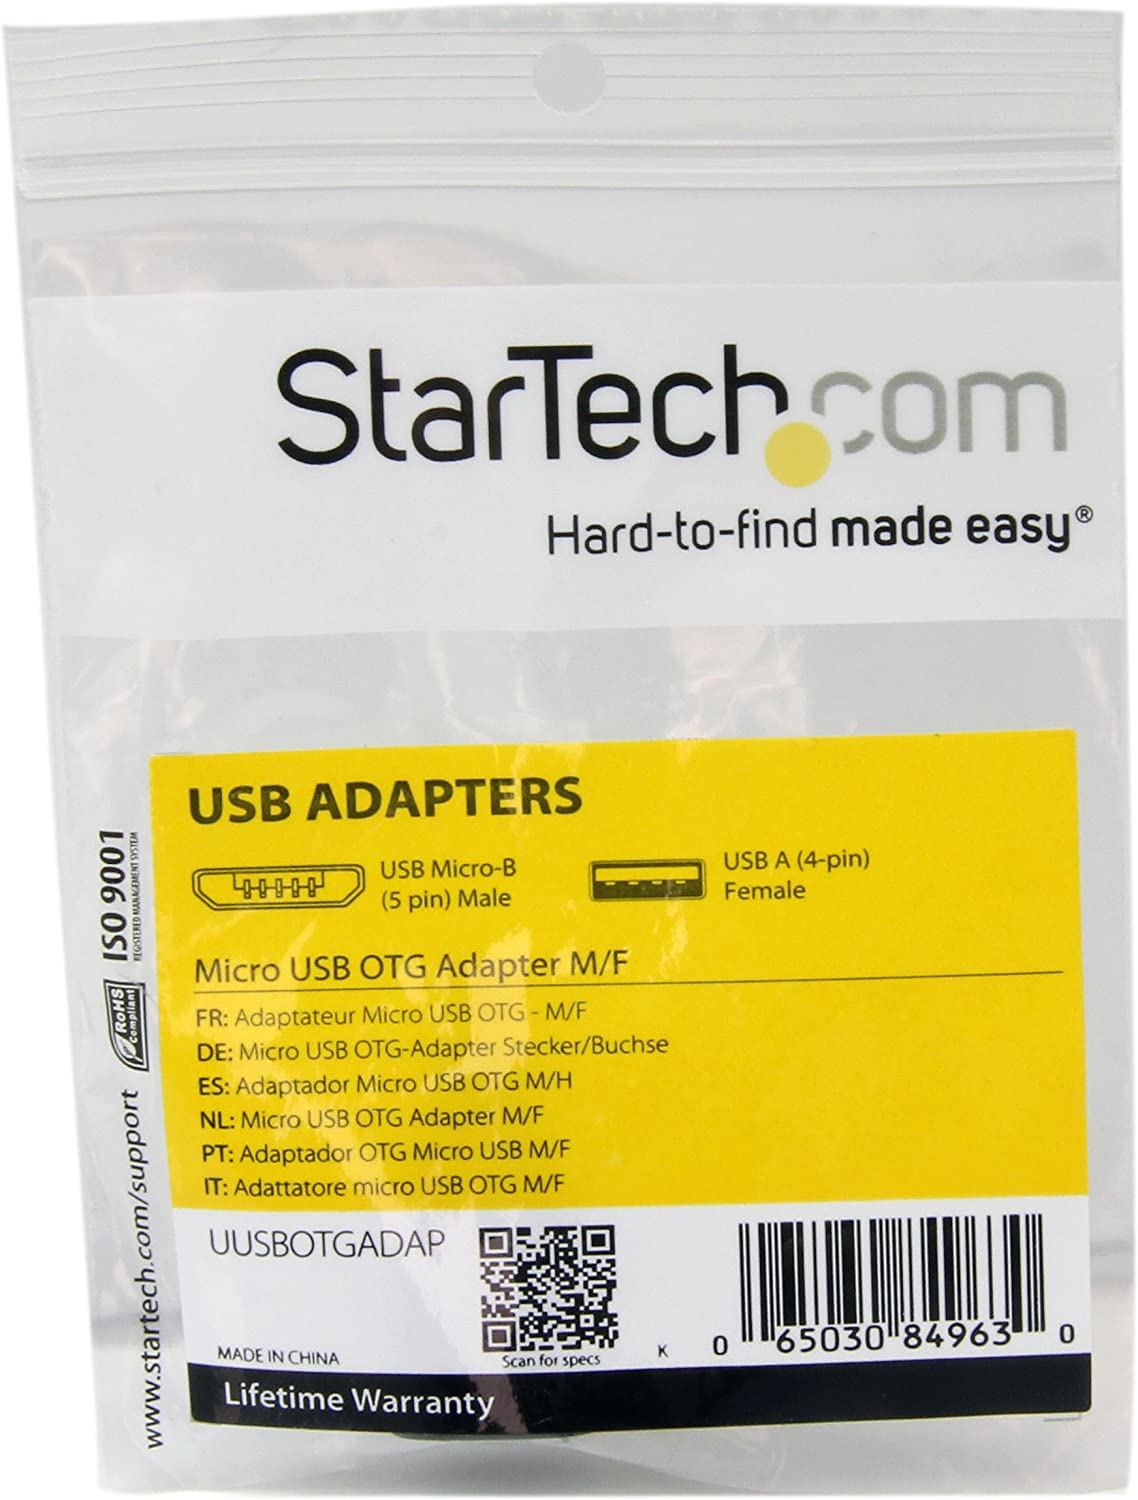 StarTech.com Micro USB OTG to USB Adapter - Micro USB Male OTG to USB Female Adapter - USB On The Go Adapter (UUSBOTGADAP), Black Adapter Black